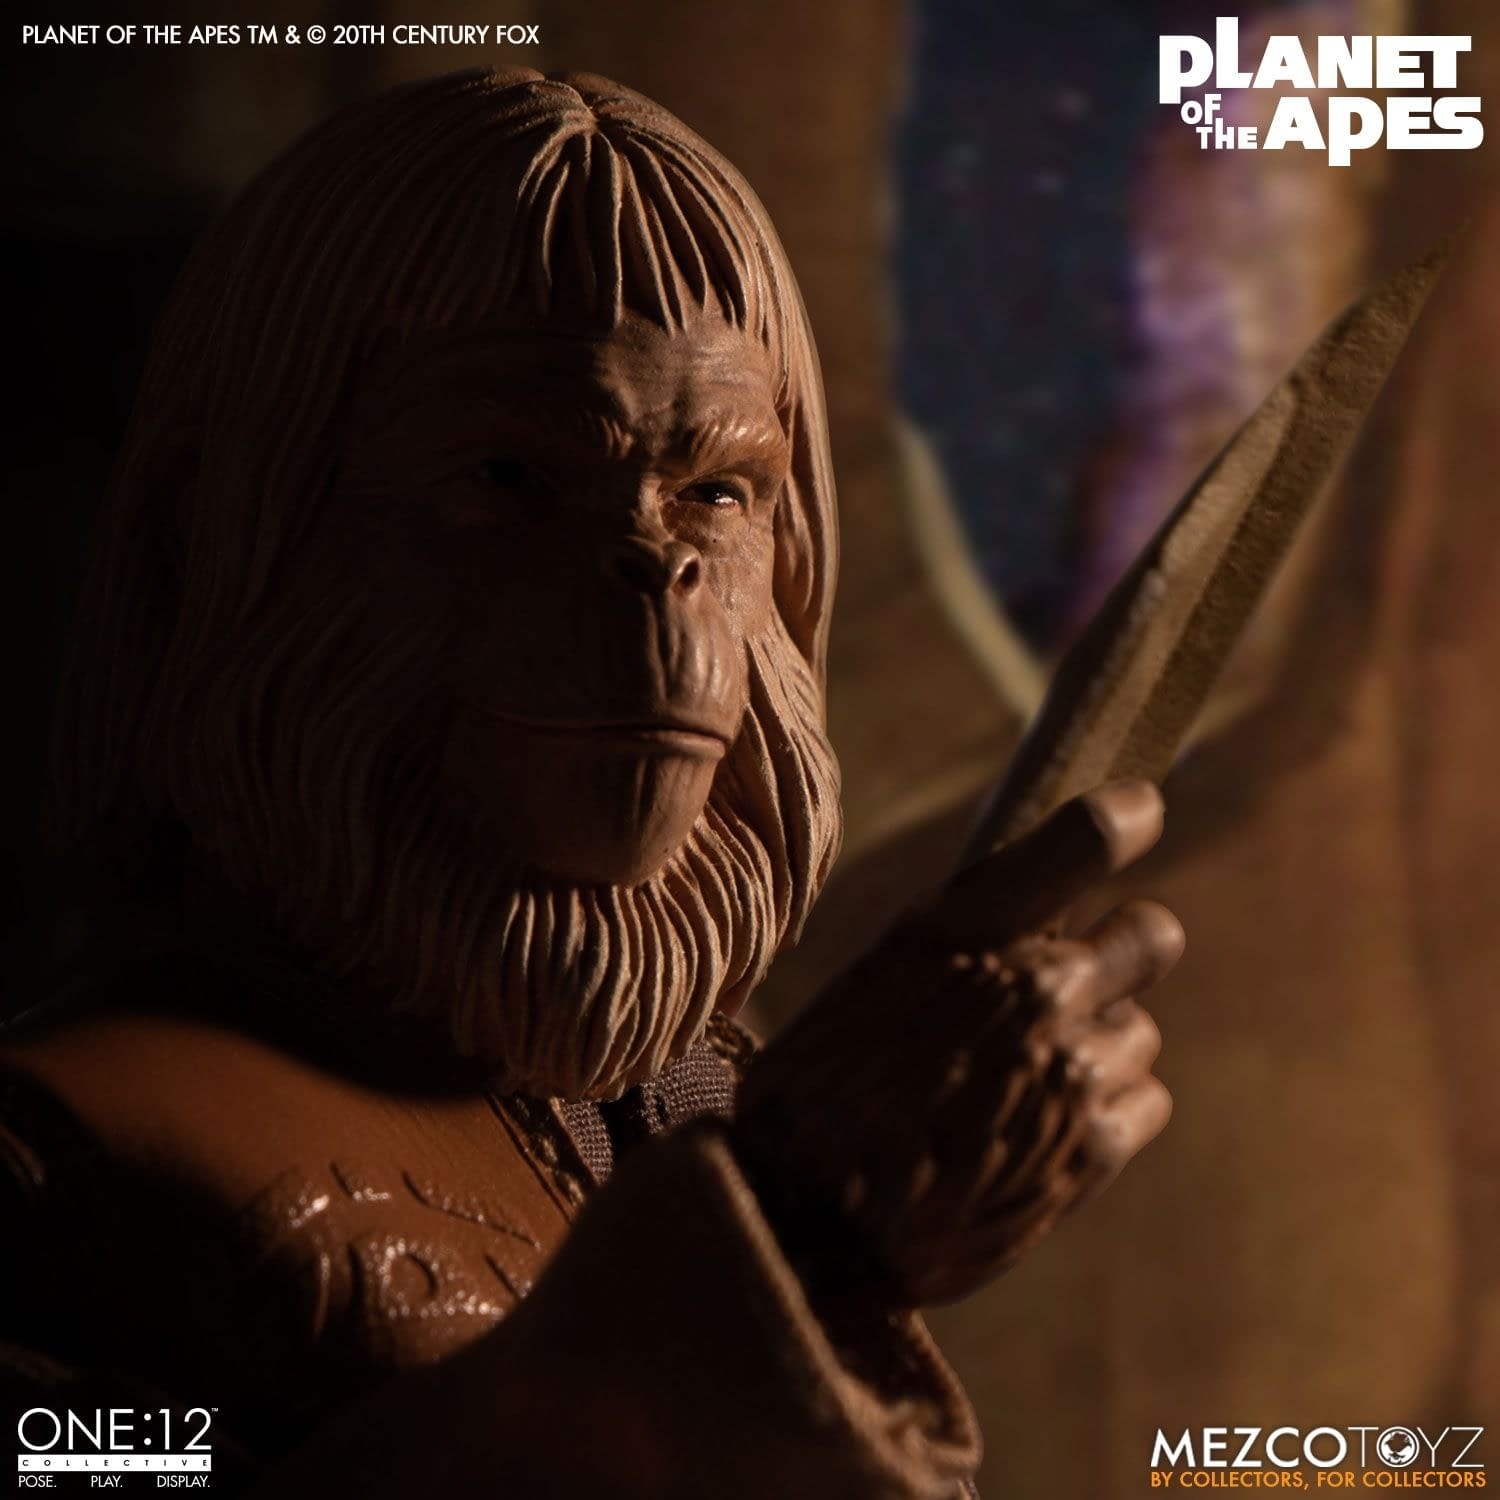 "Planet of the Apes" (1968) Dr. Zaius Arrives at Mezco Toyz 